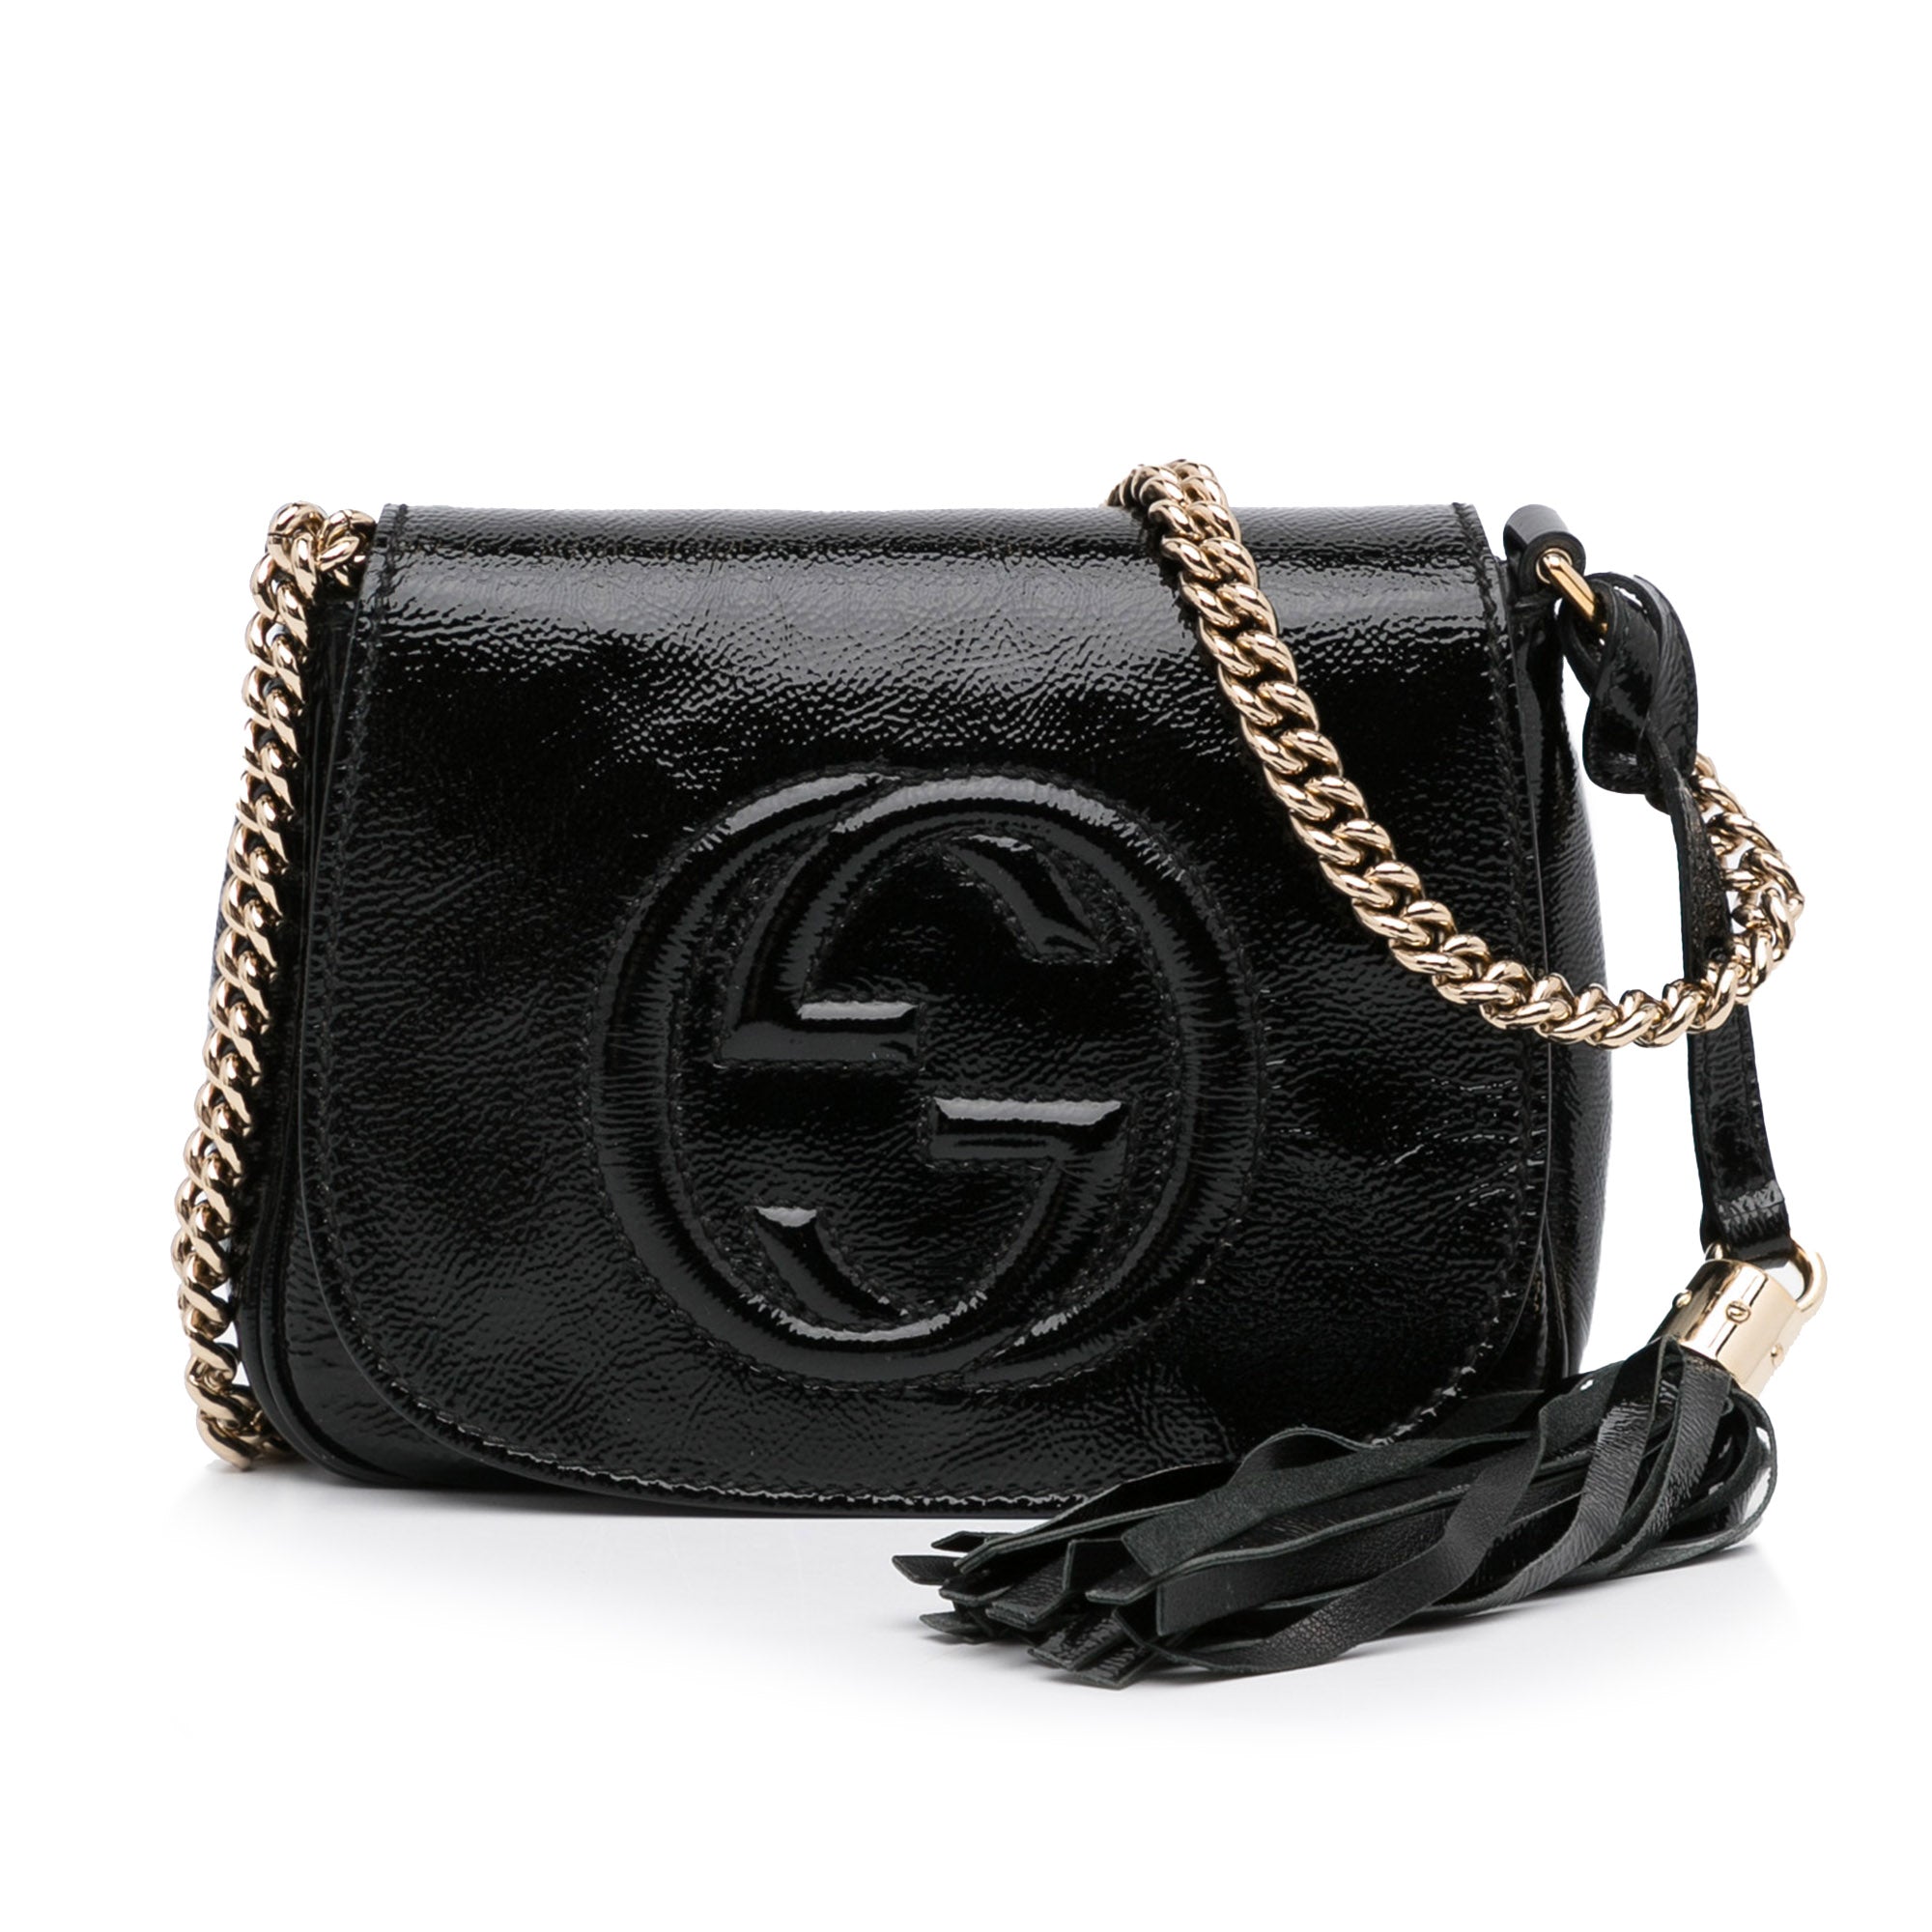 Vintage Gucci Black Patent Leather Bucket Bag Purse Shoulder